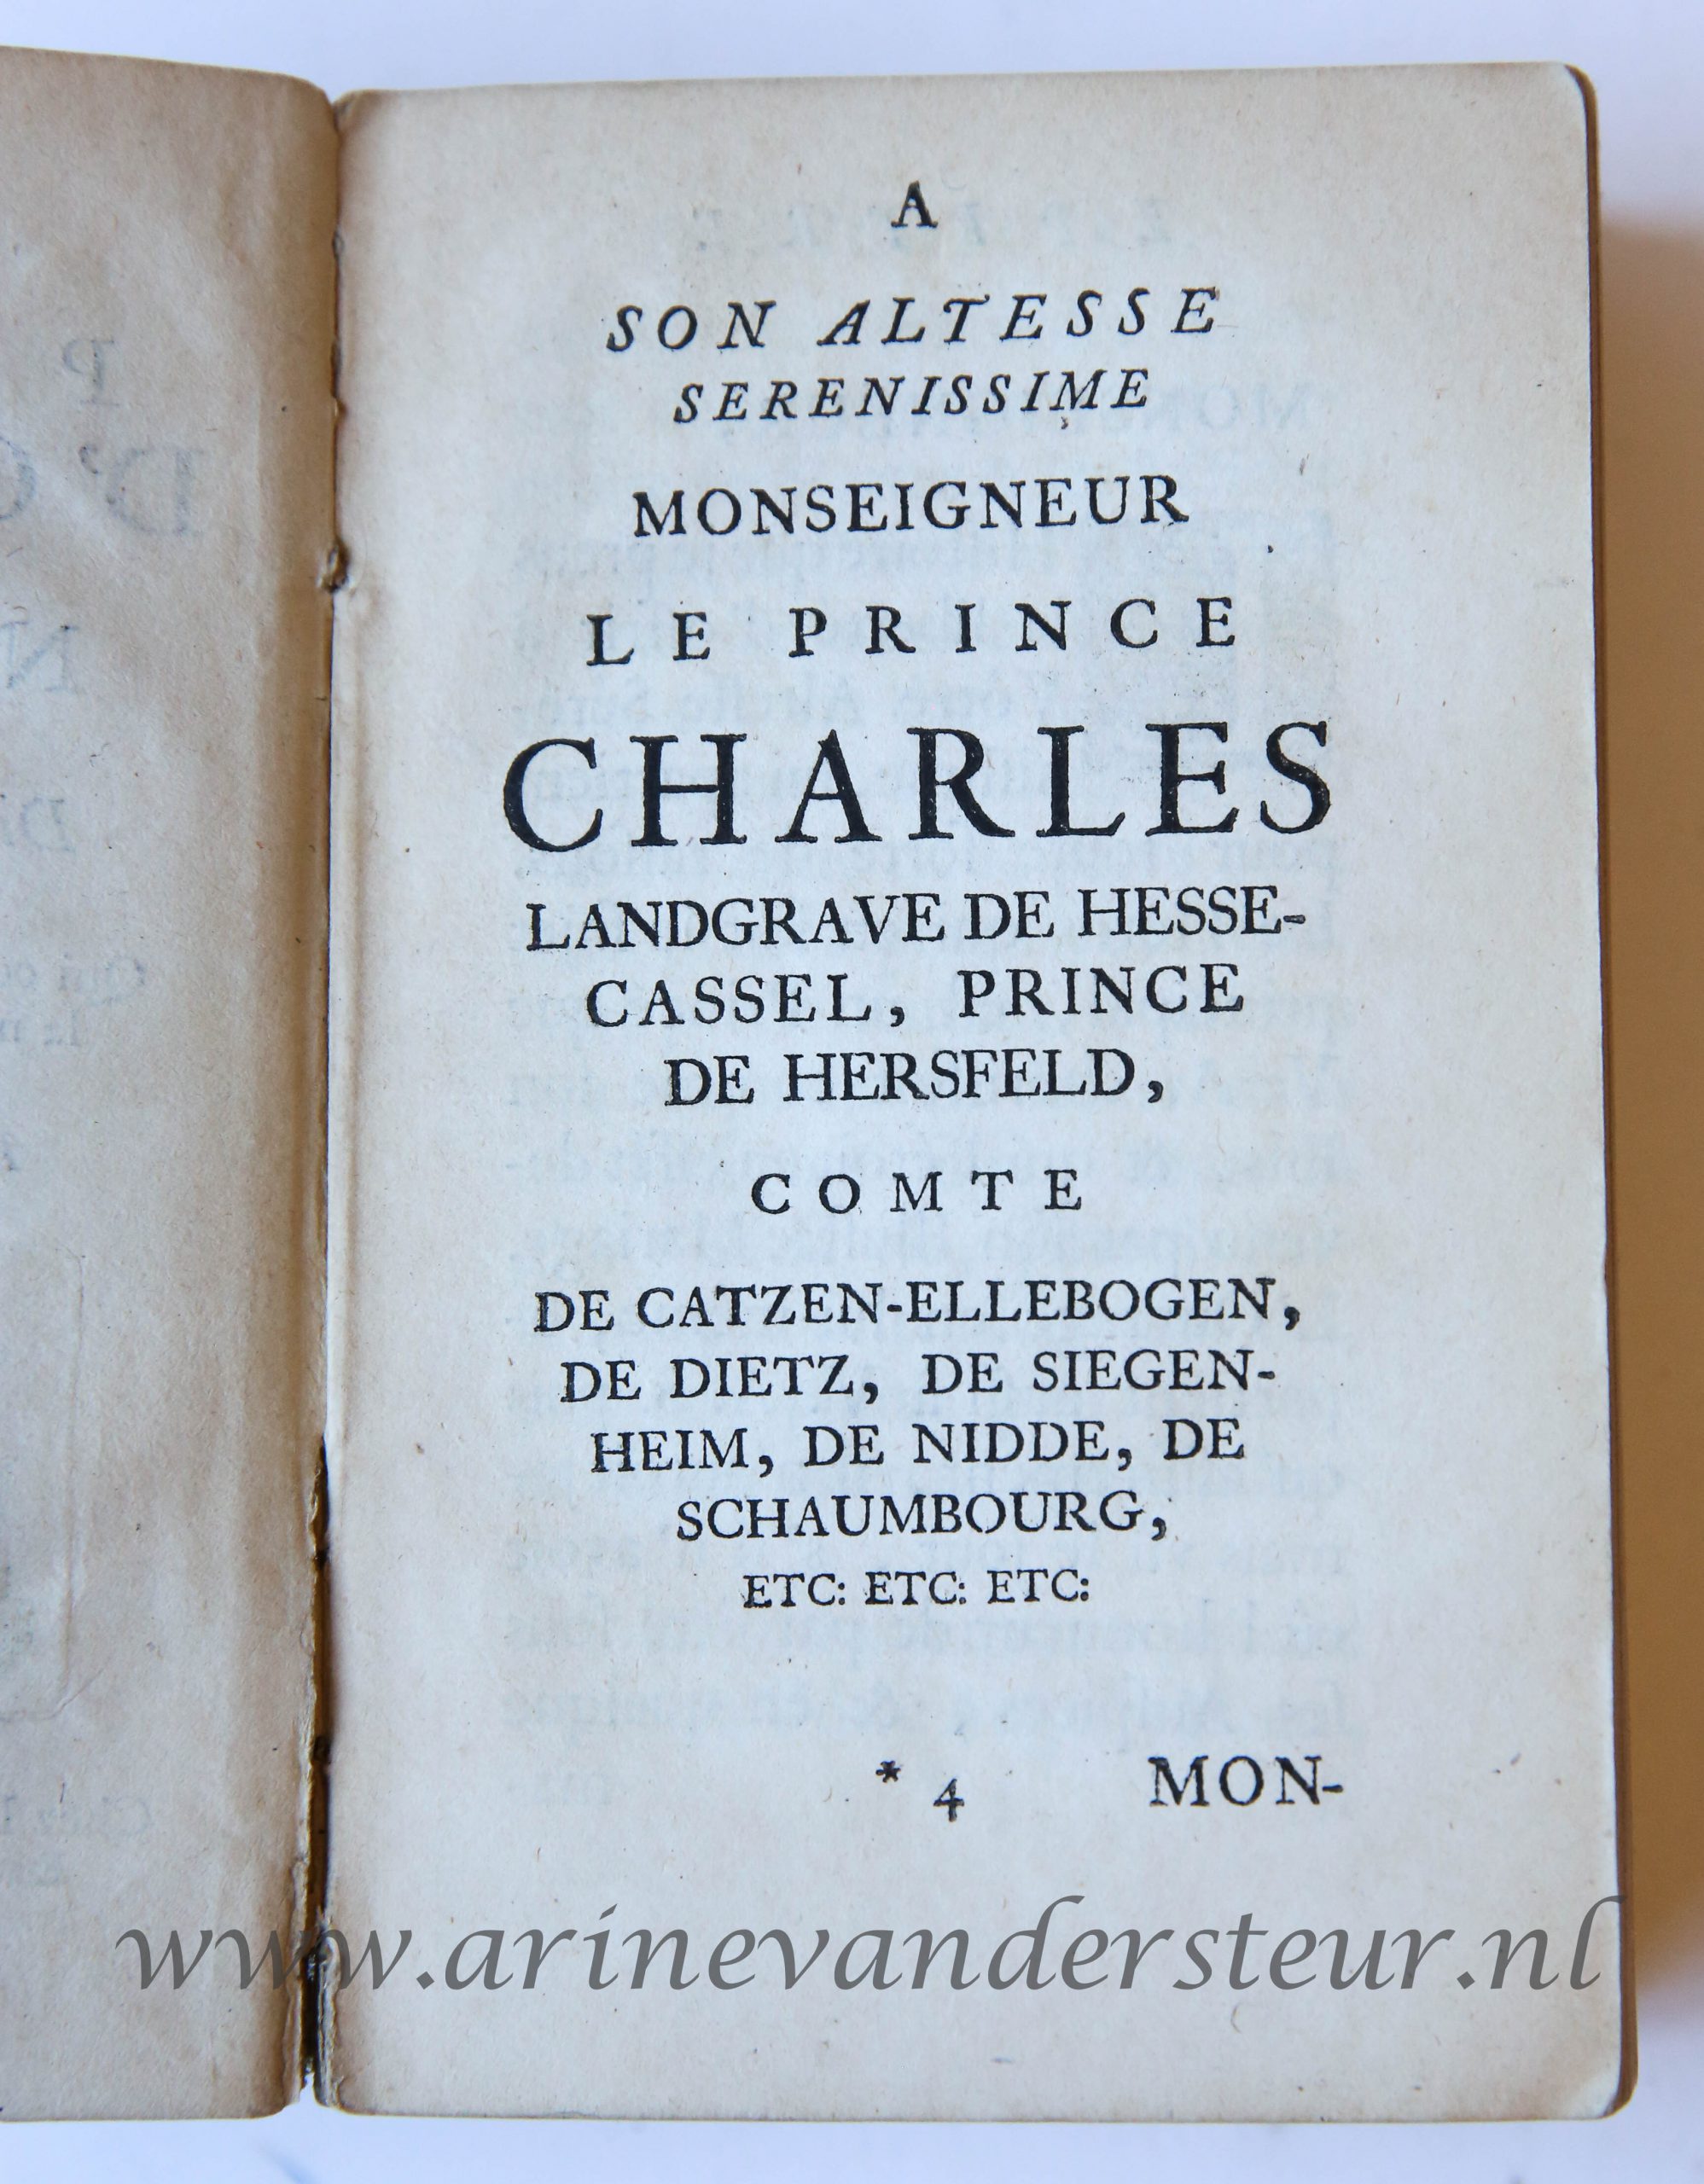 Histoire du Prince d' Orange et de Nassau. 2 delen in 1 band, Leeuwarden, Halma, 1715, (24)+252+(6)+(2)+306+(10) pp.